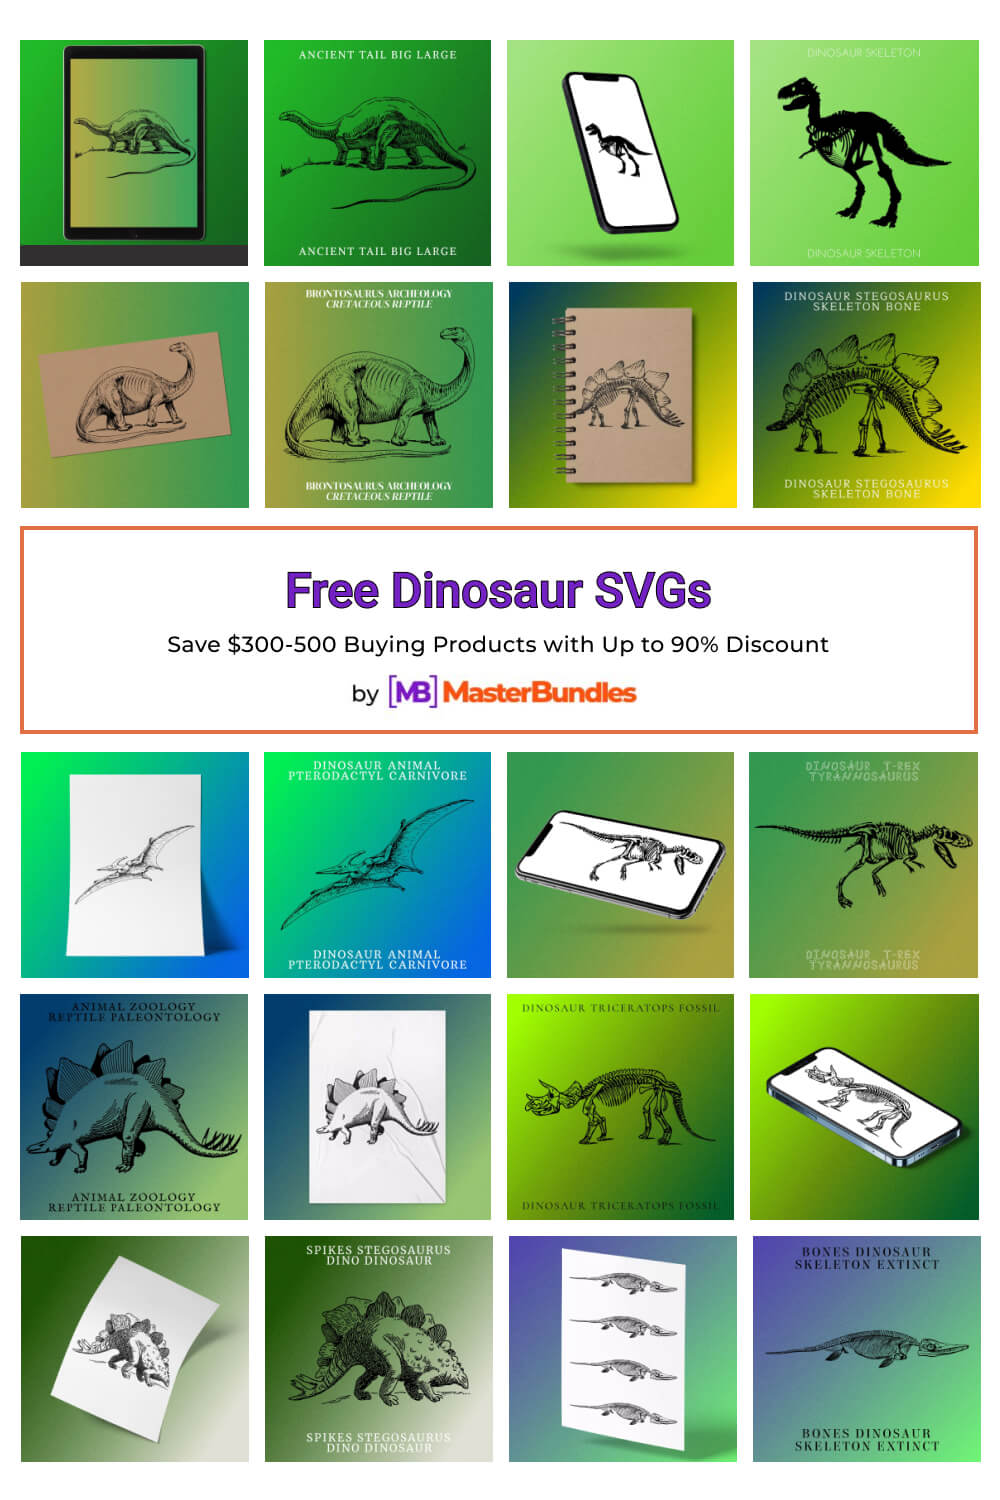 free dinosaur svgs pinterest image.